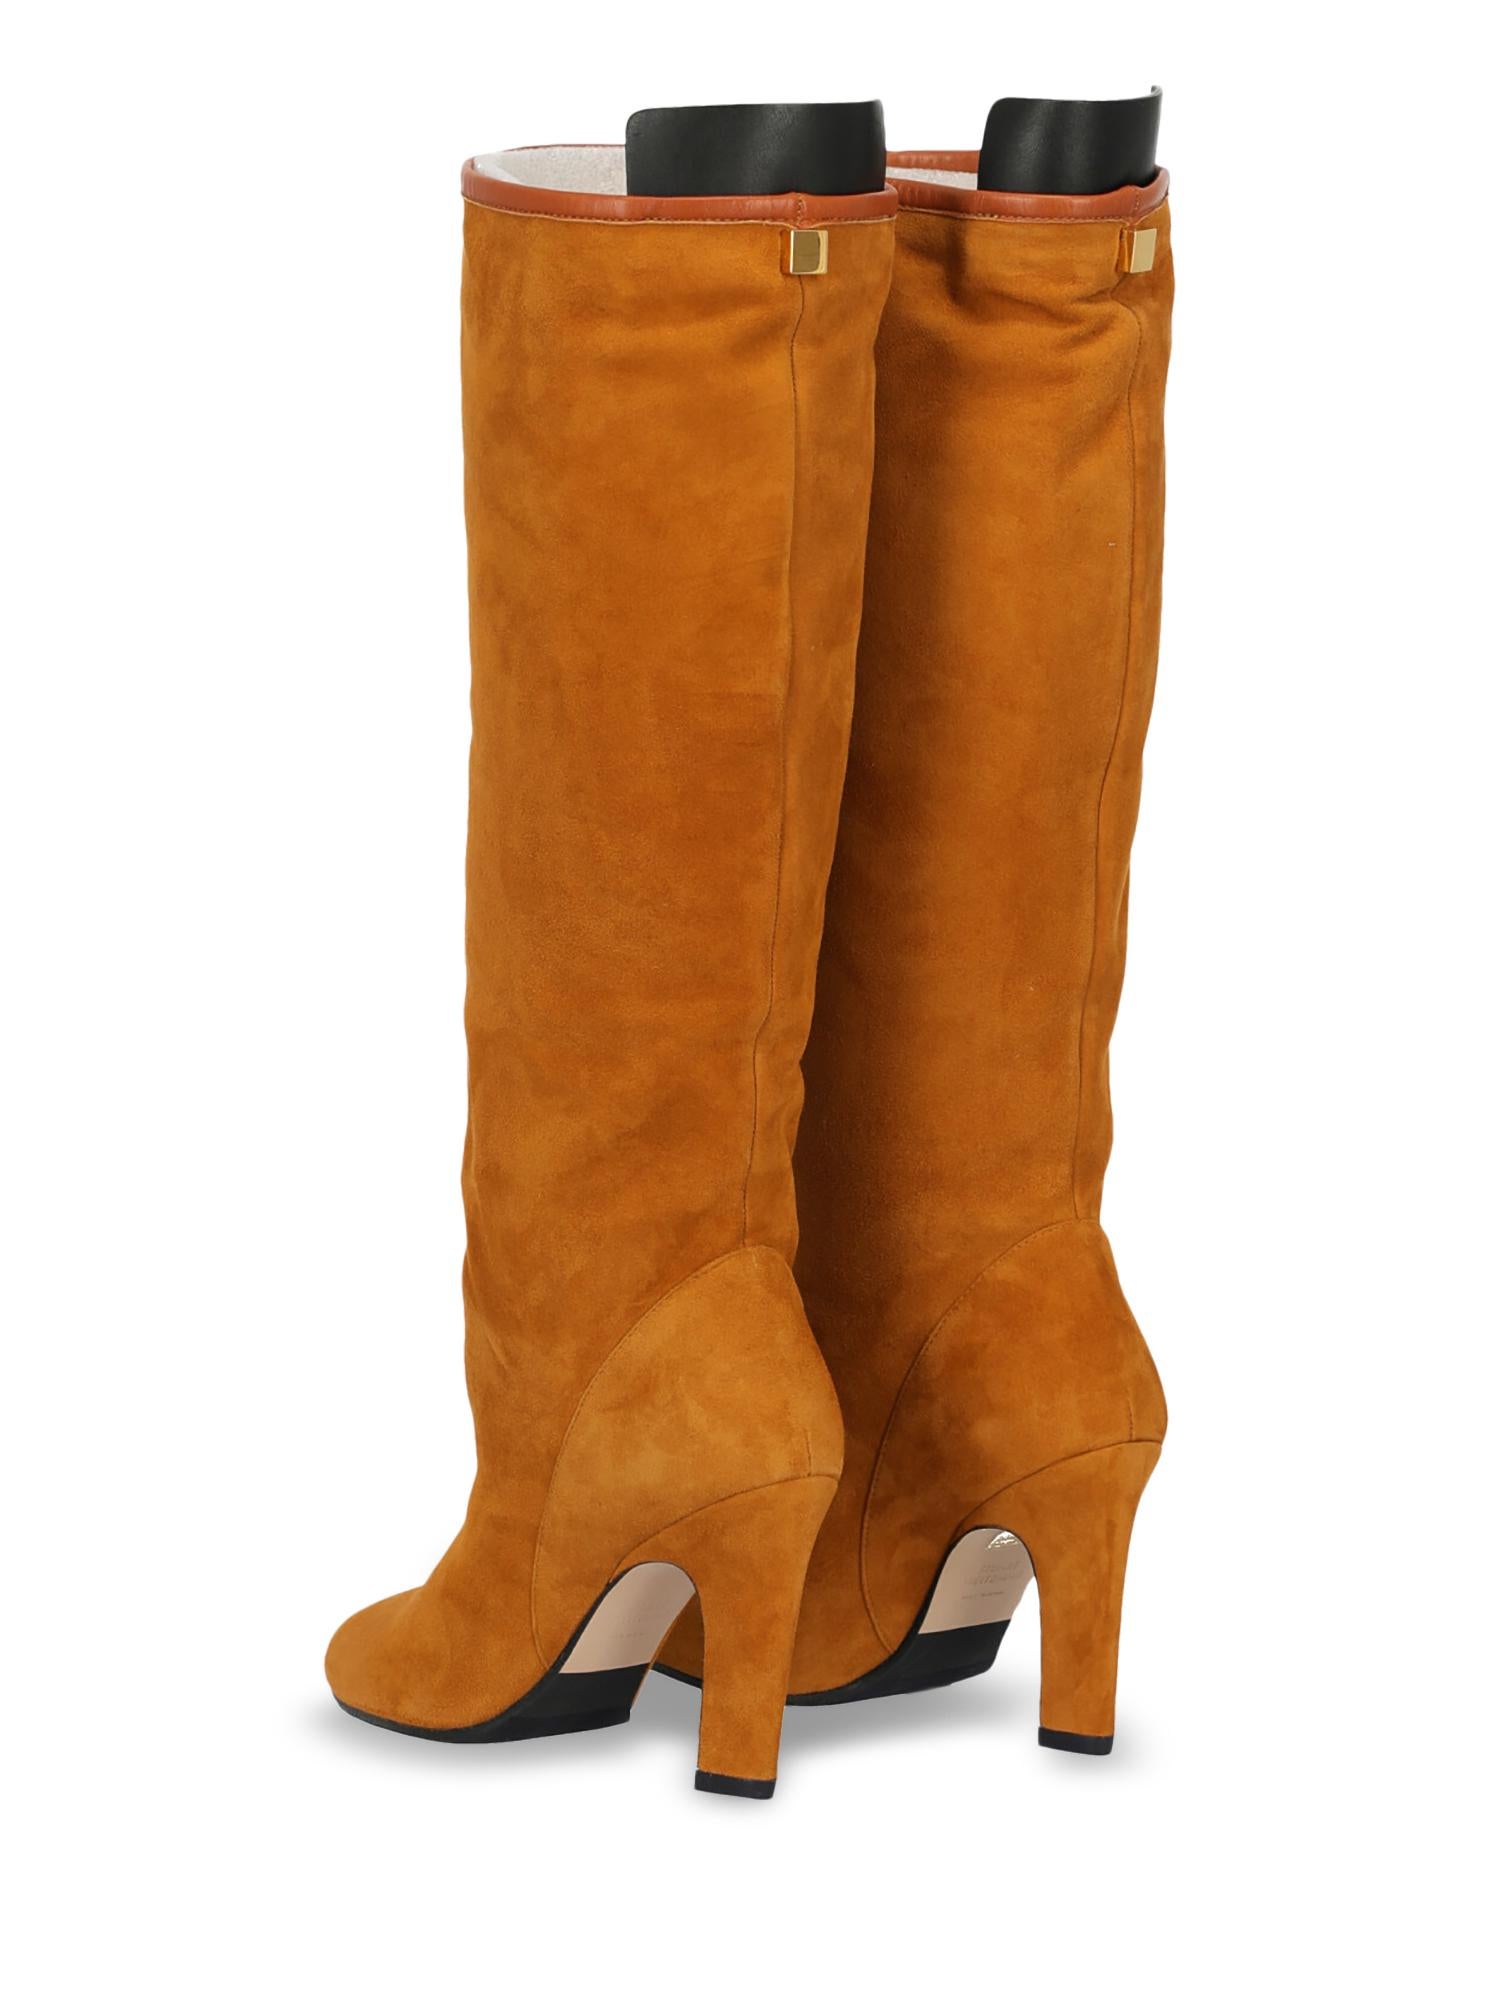 Orange Stuart Weitzman Woman Boots Black EU 38 For Sale